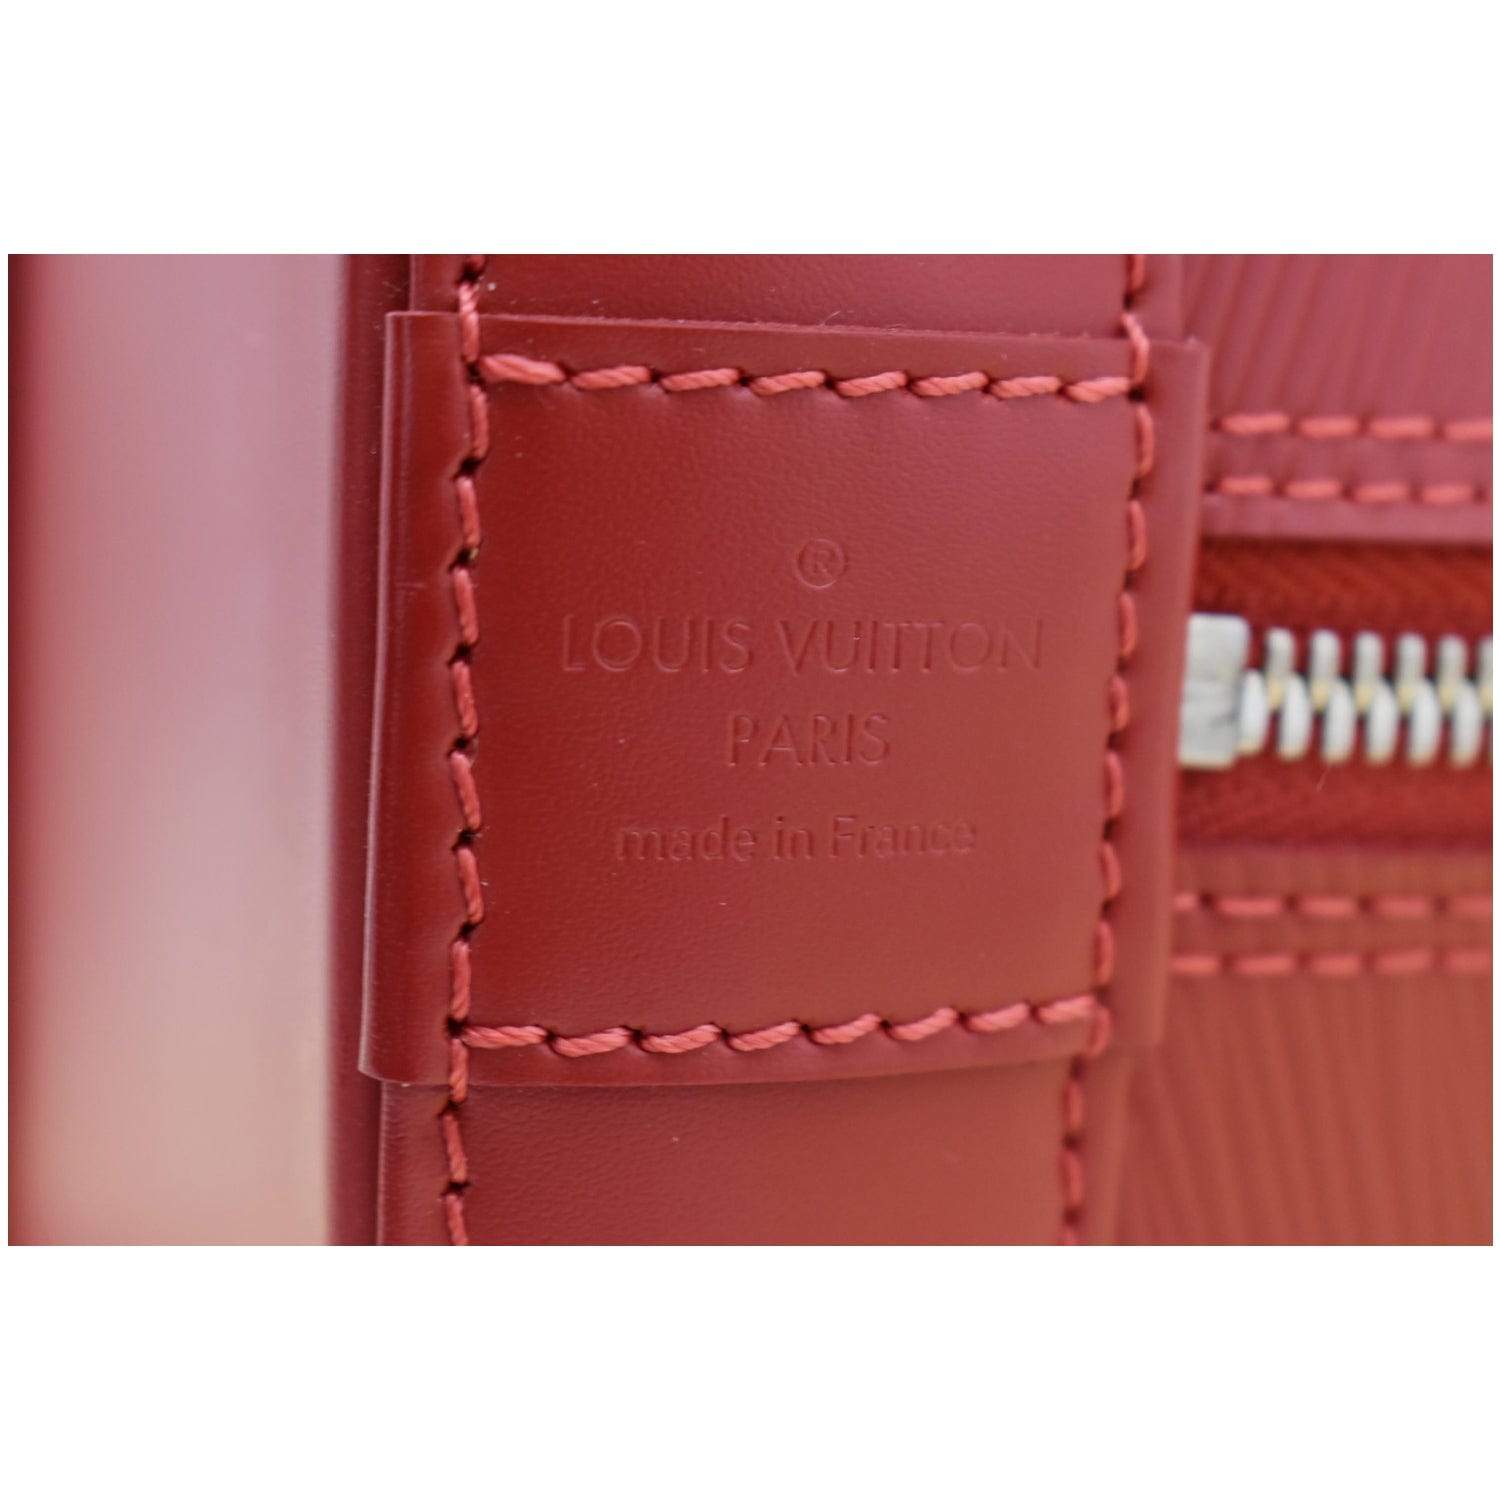 LOUIS VUITTON Alma MM Epi Leather Satchel Bag Red - Monogram - ep_vintage  luxury Store - All - Louis - M41426 – dct - Bag - Old - Style - Boston - 50  - Vuitton - Keep